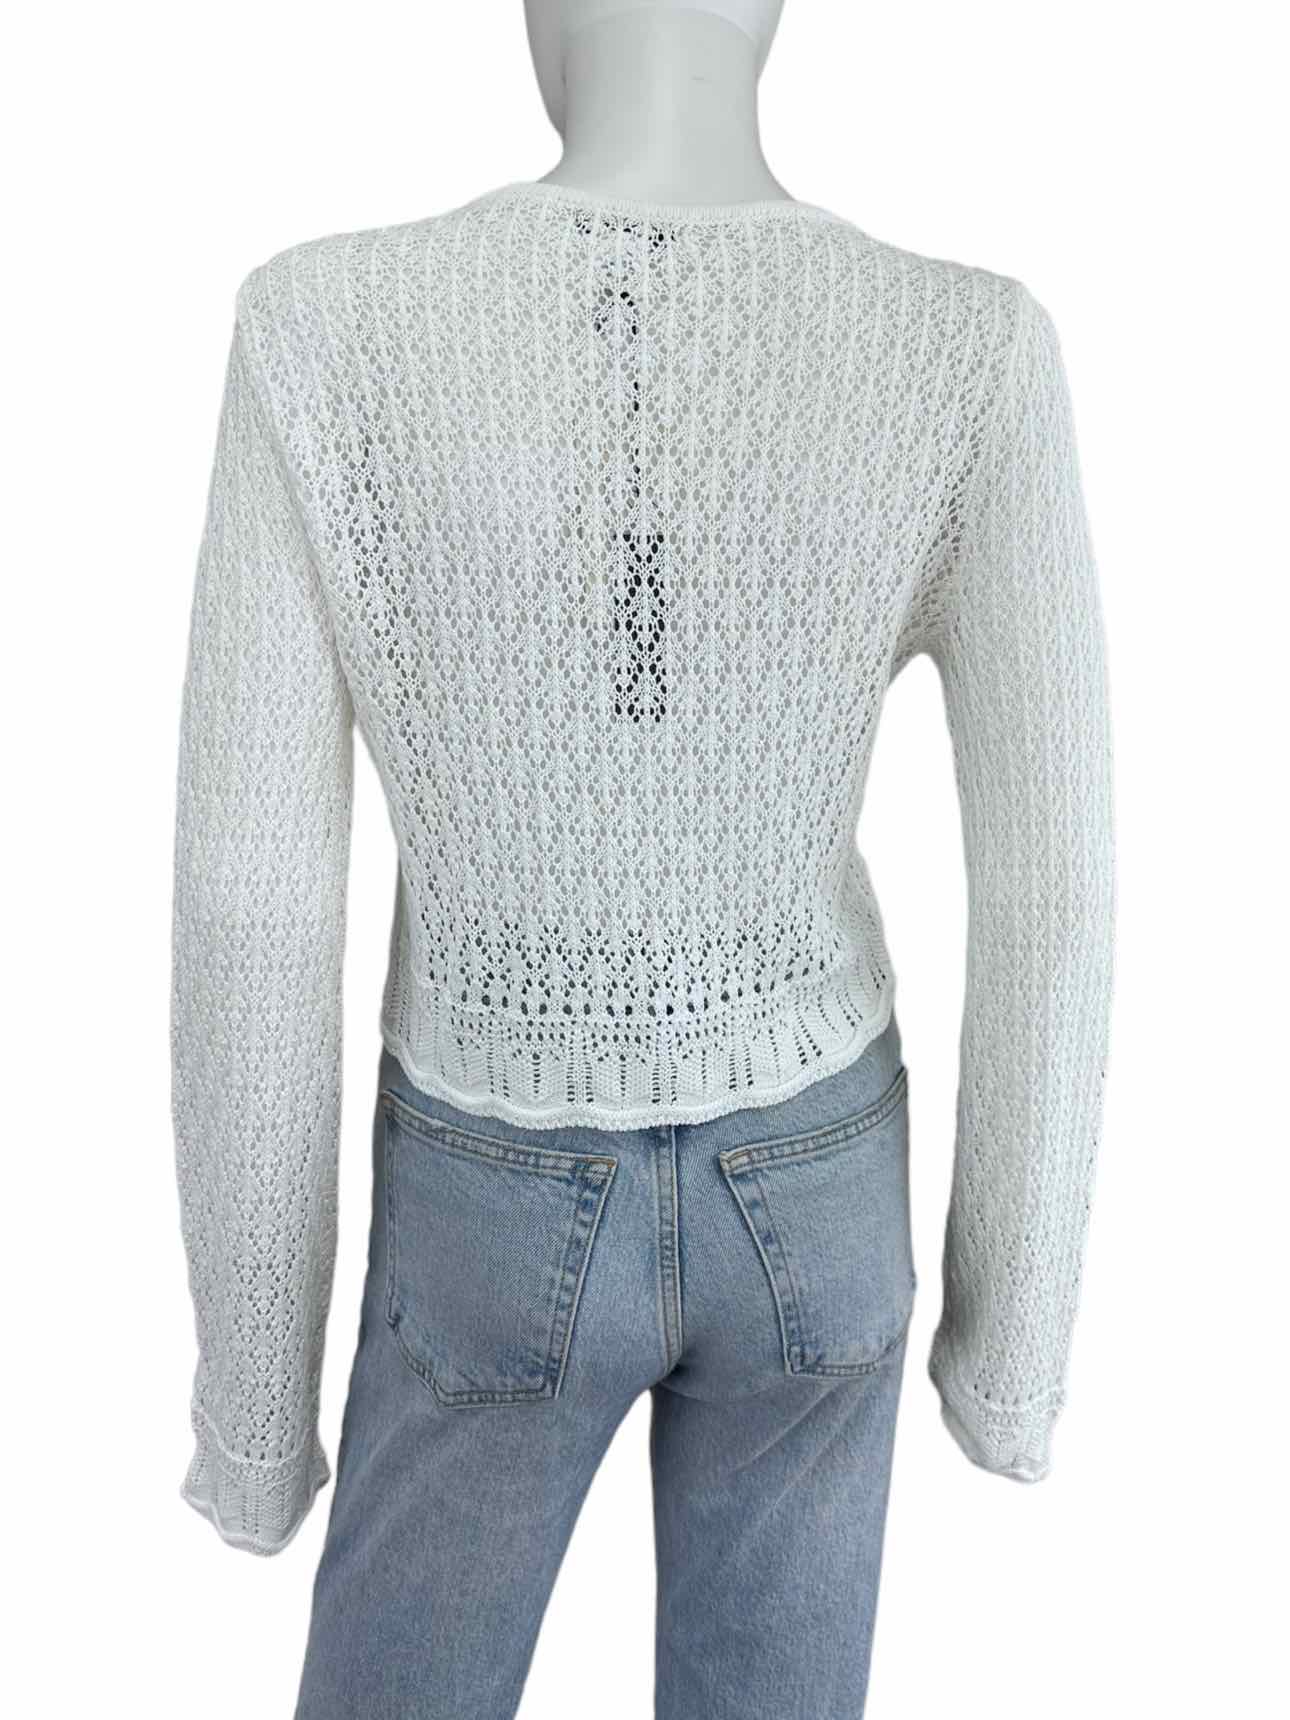 bobiBLACK NWT White Sweater Size S